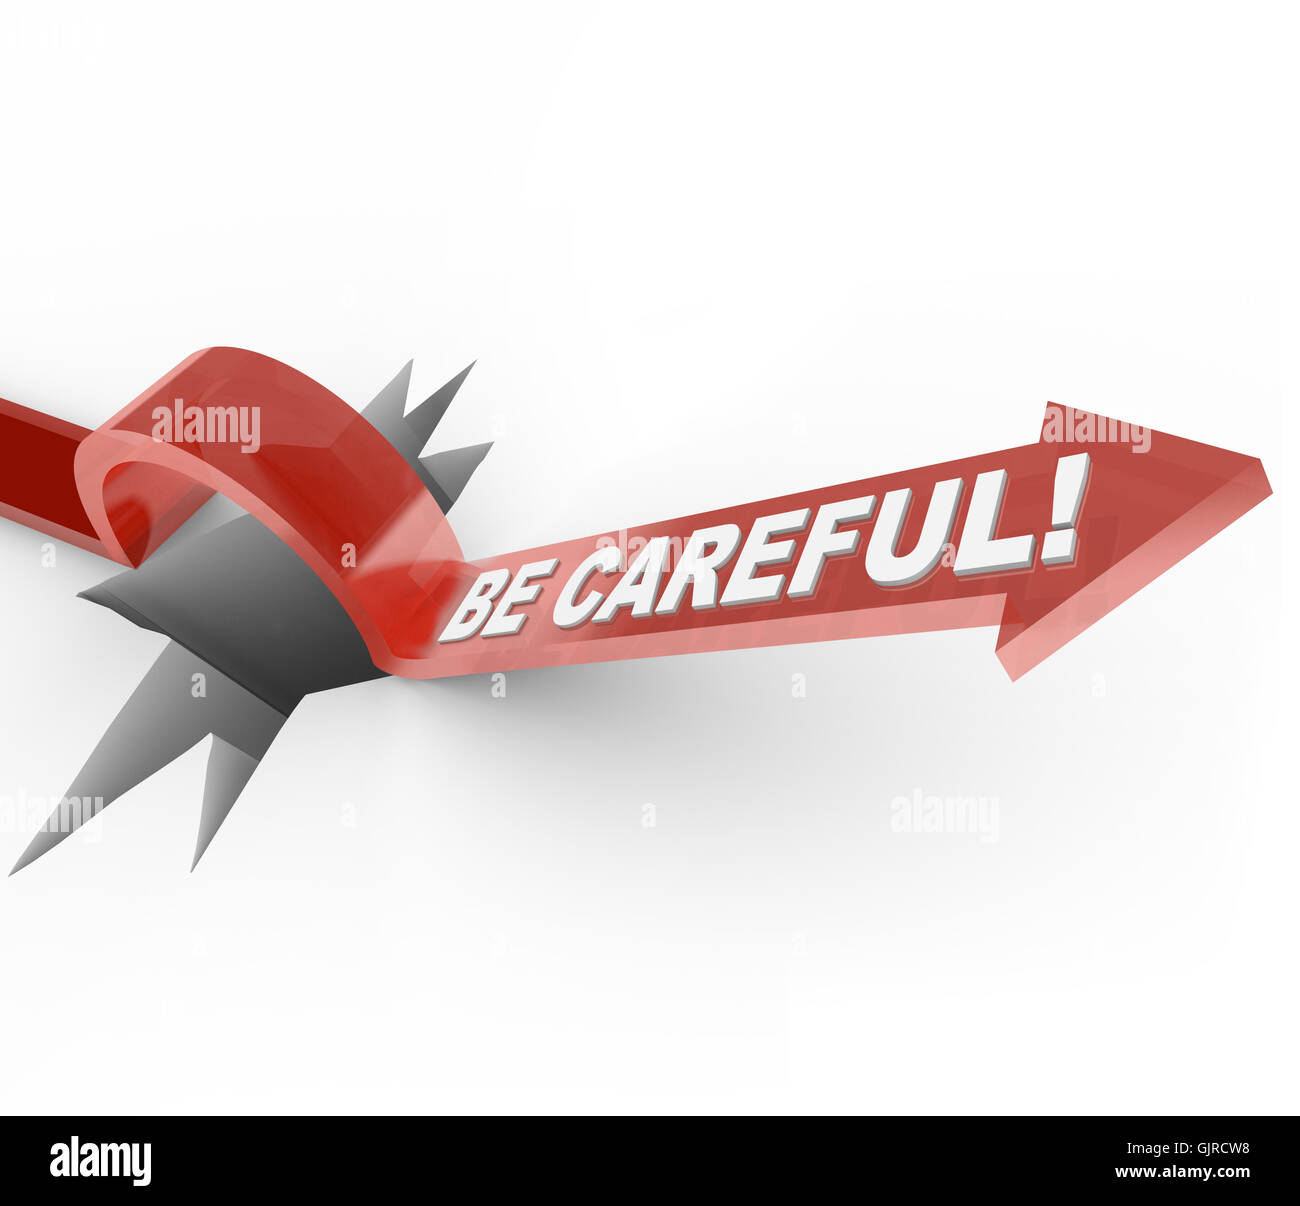 Be Careful - Be Alert Warning for Dangerous Hazard Stock Photo